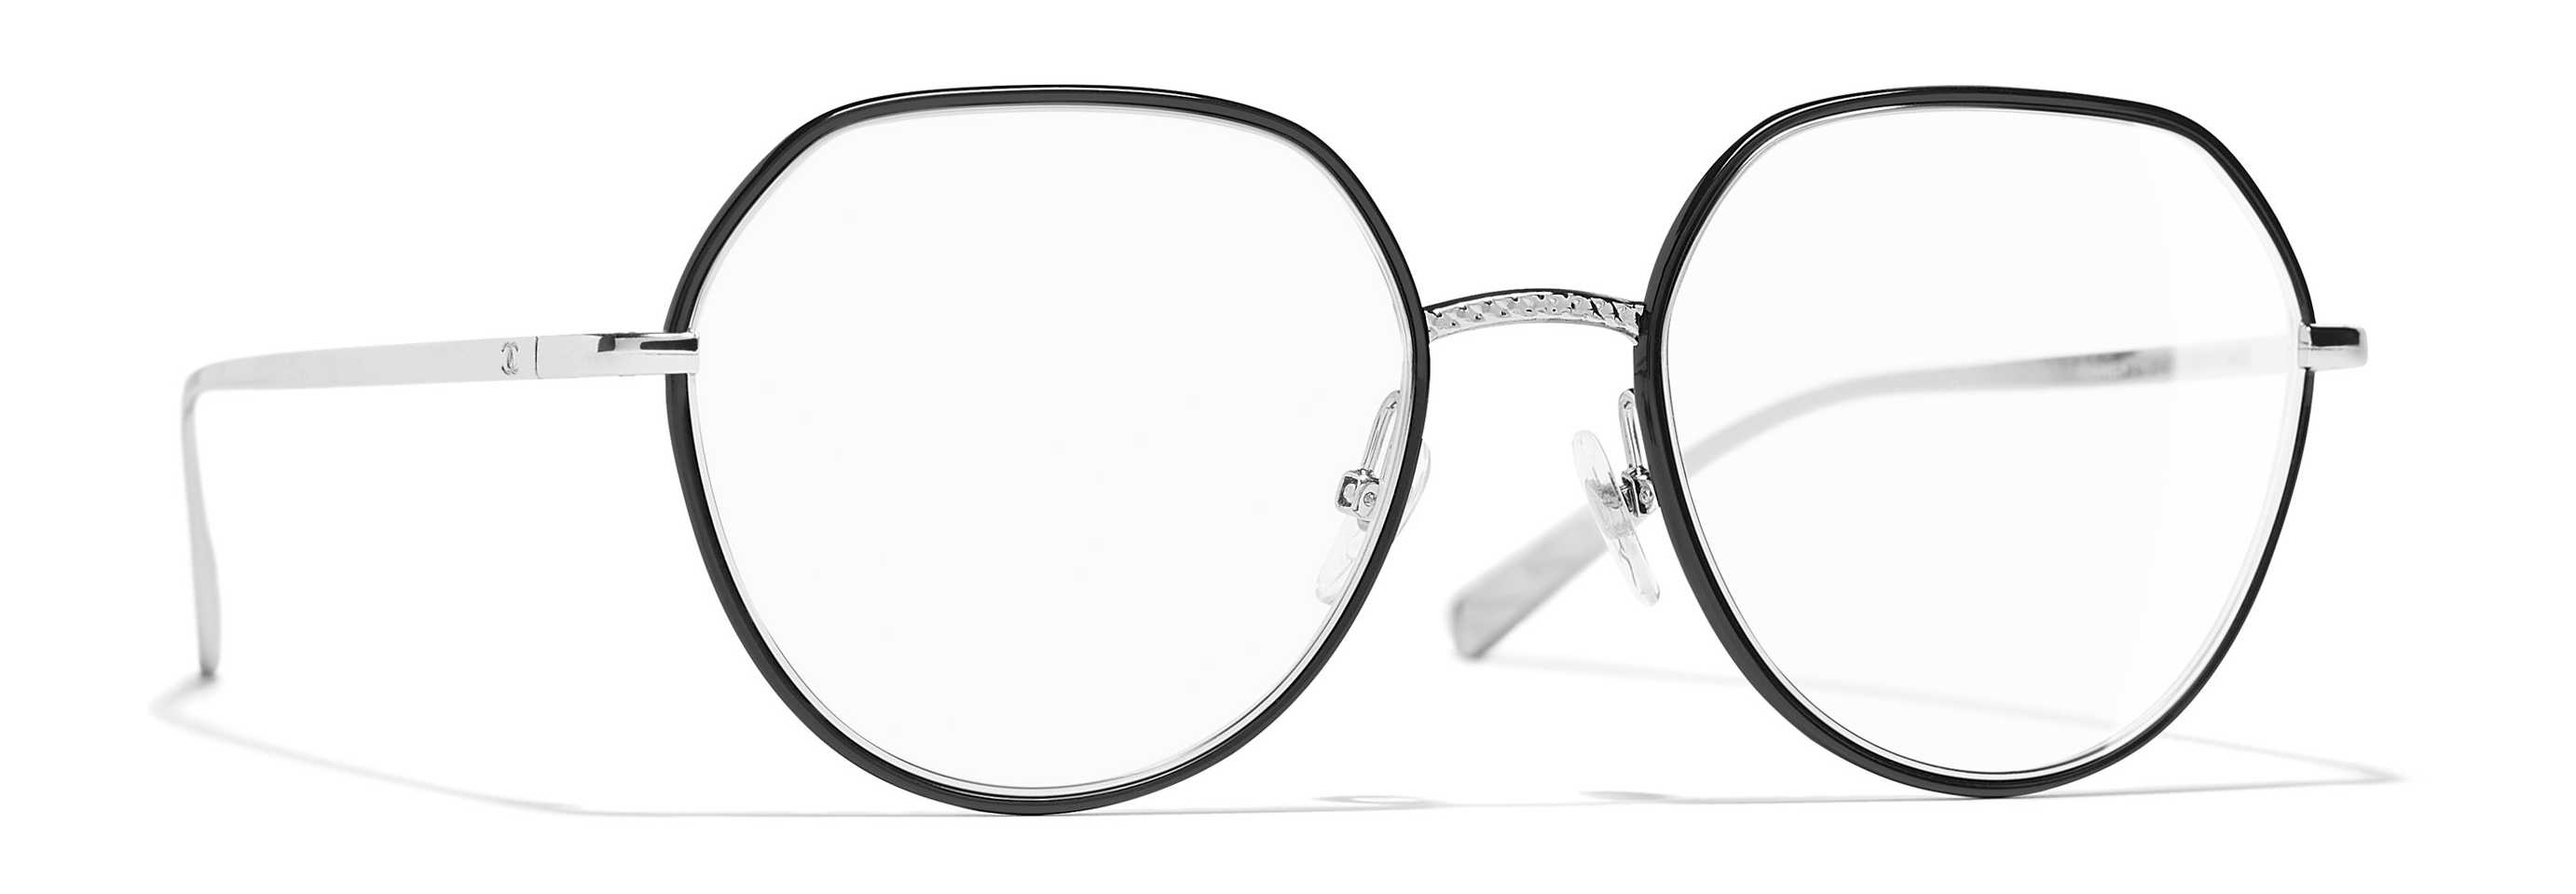 Eyeglasses CHANEL CH 2189J C124 52/19 Woman Noir / Argent Round Full Frame  Glasses trendy 52mmx19mm 304$CA